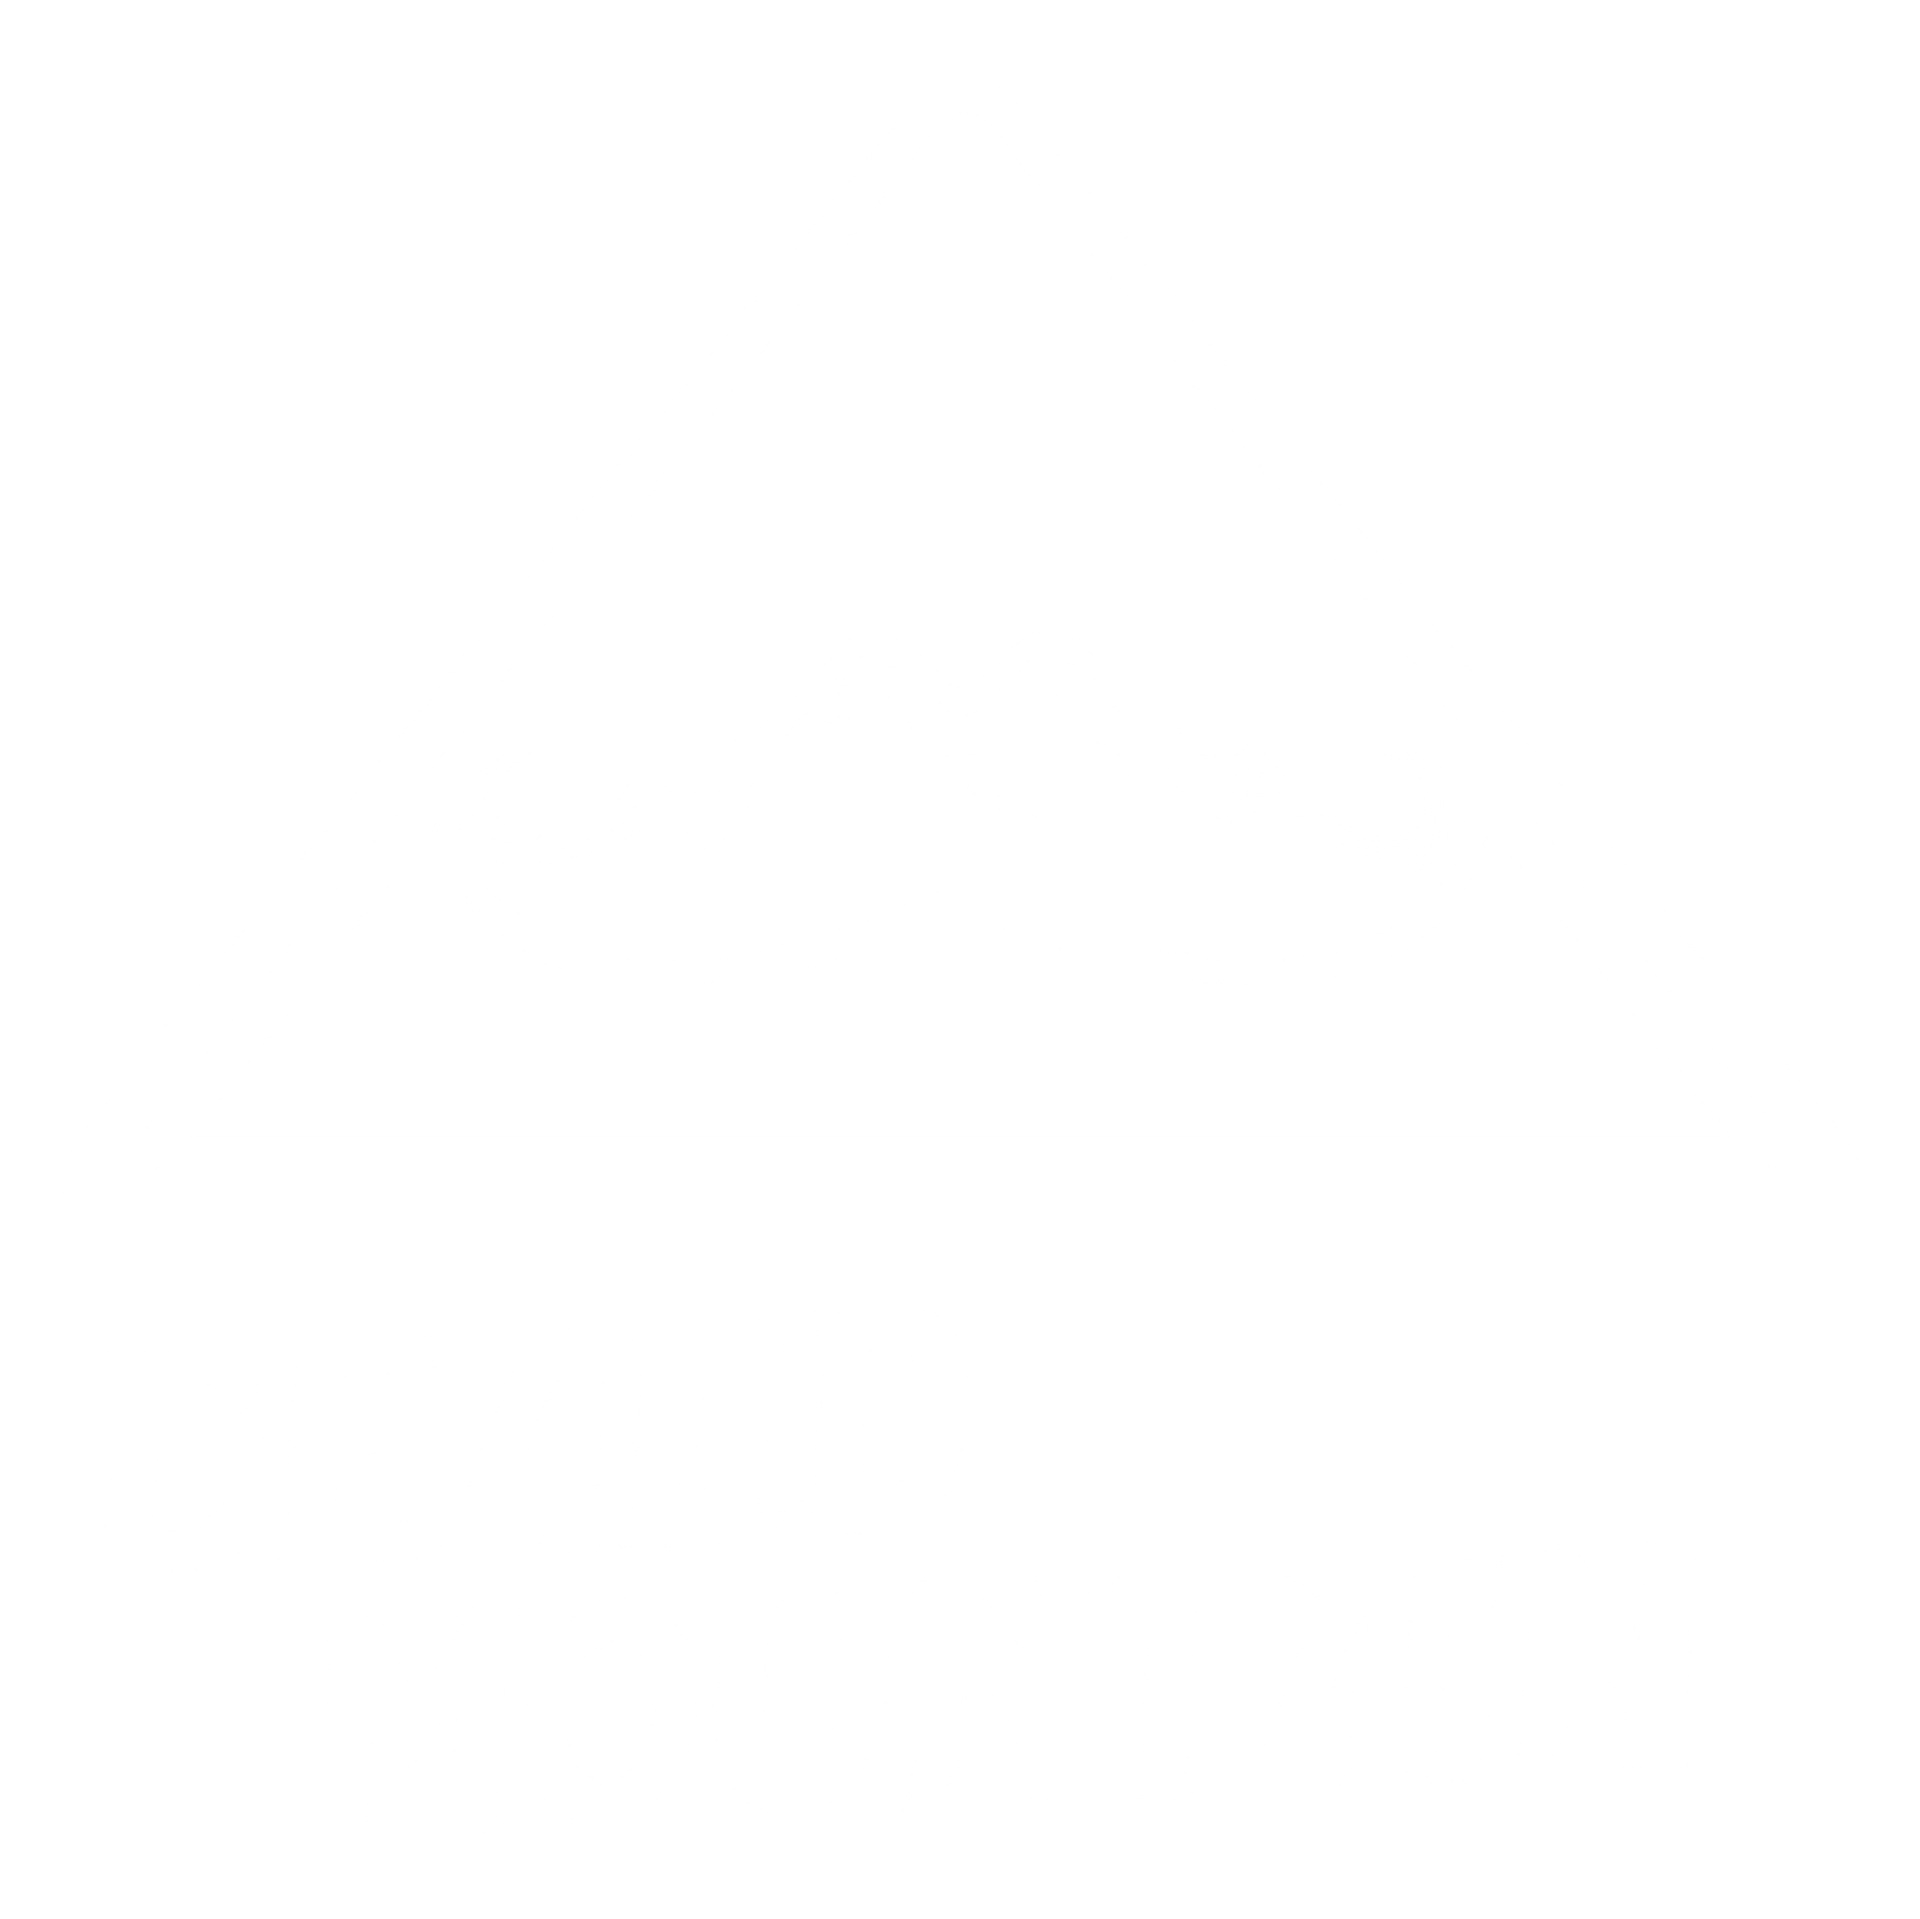 10% Off With Beard Mountain Coupon Code